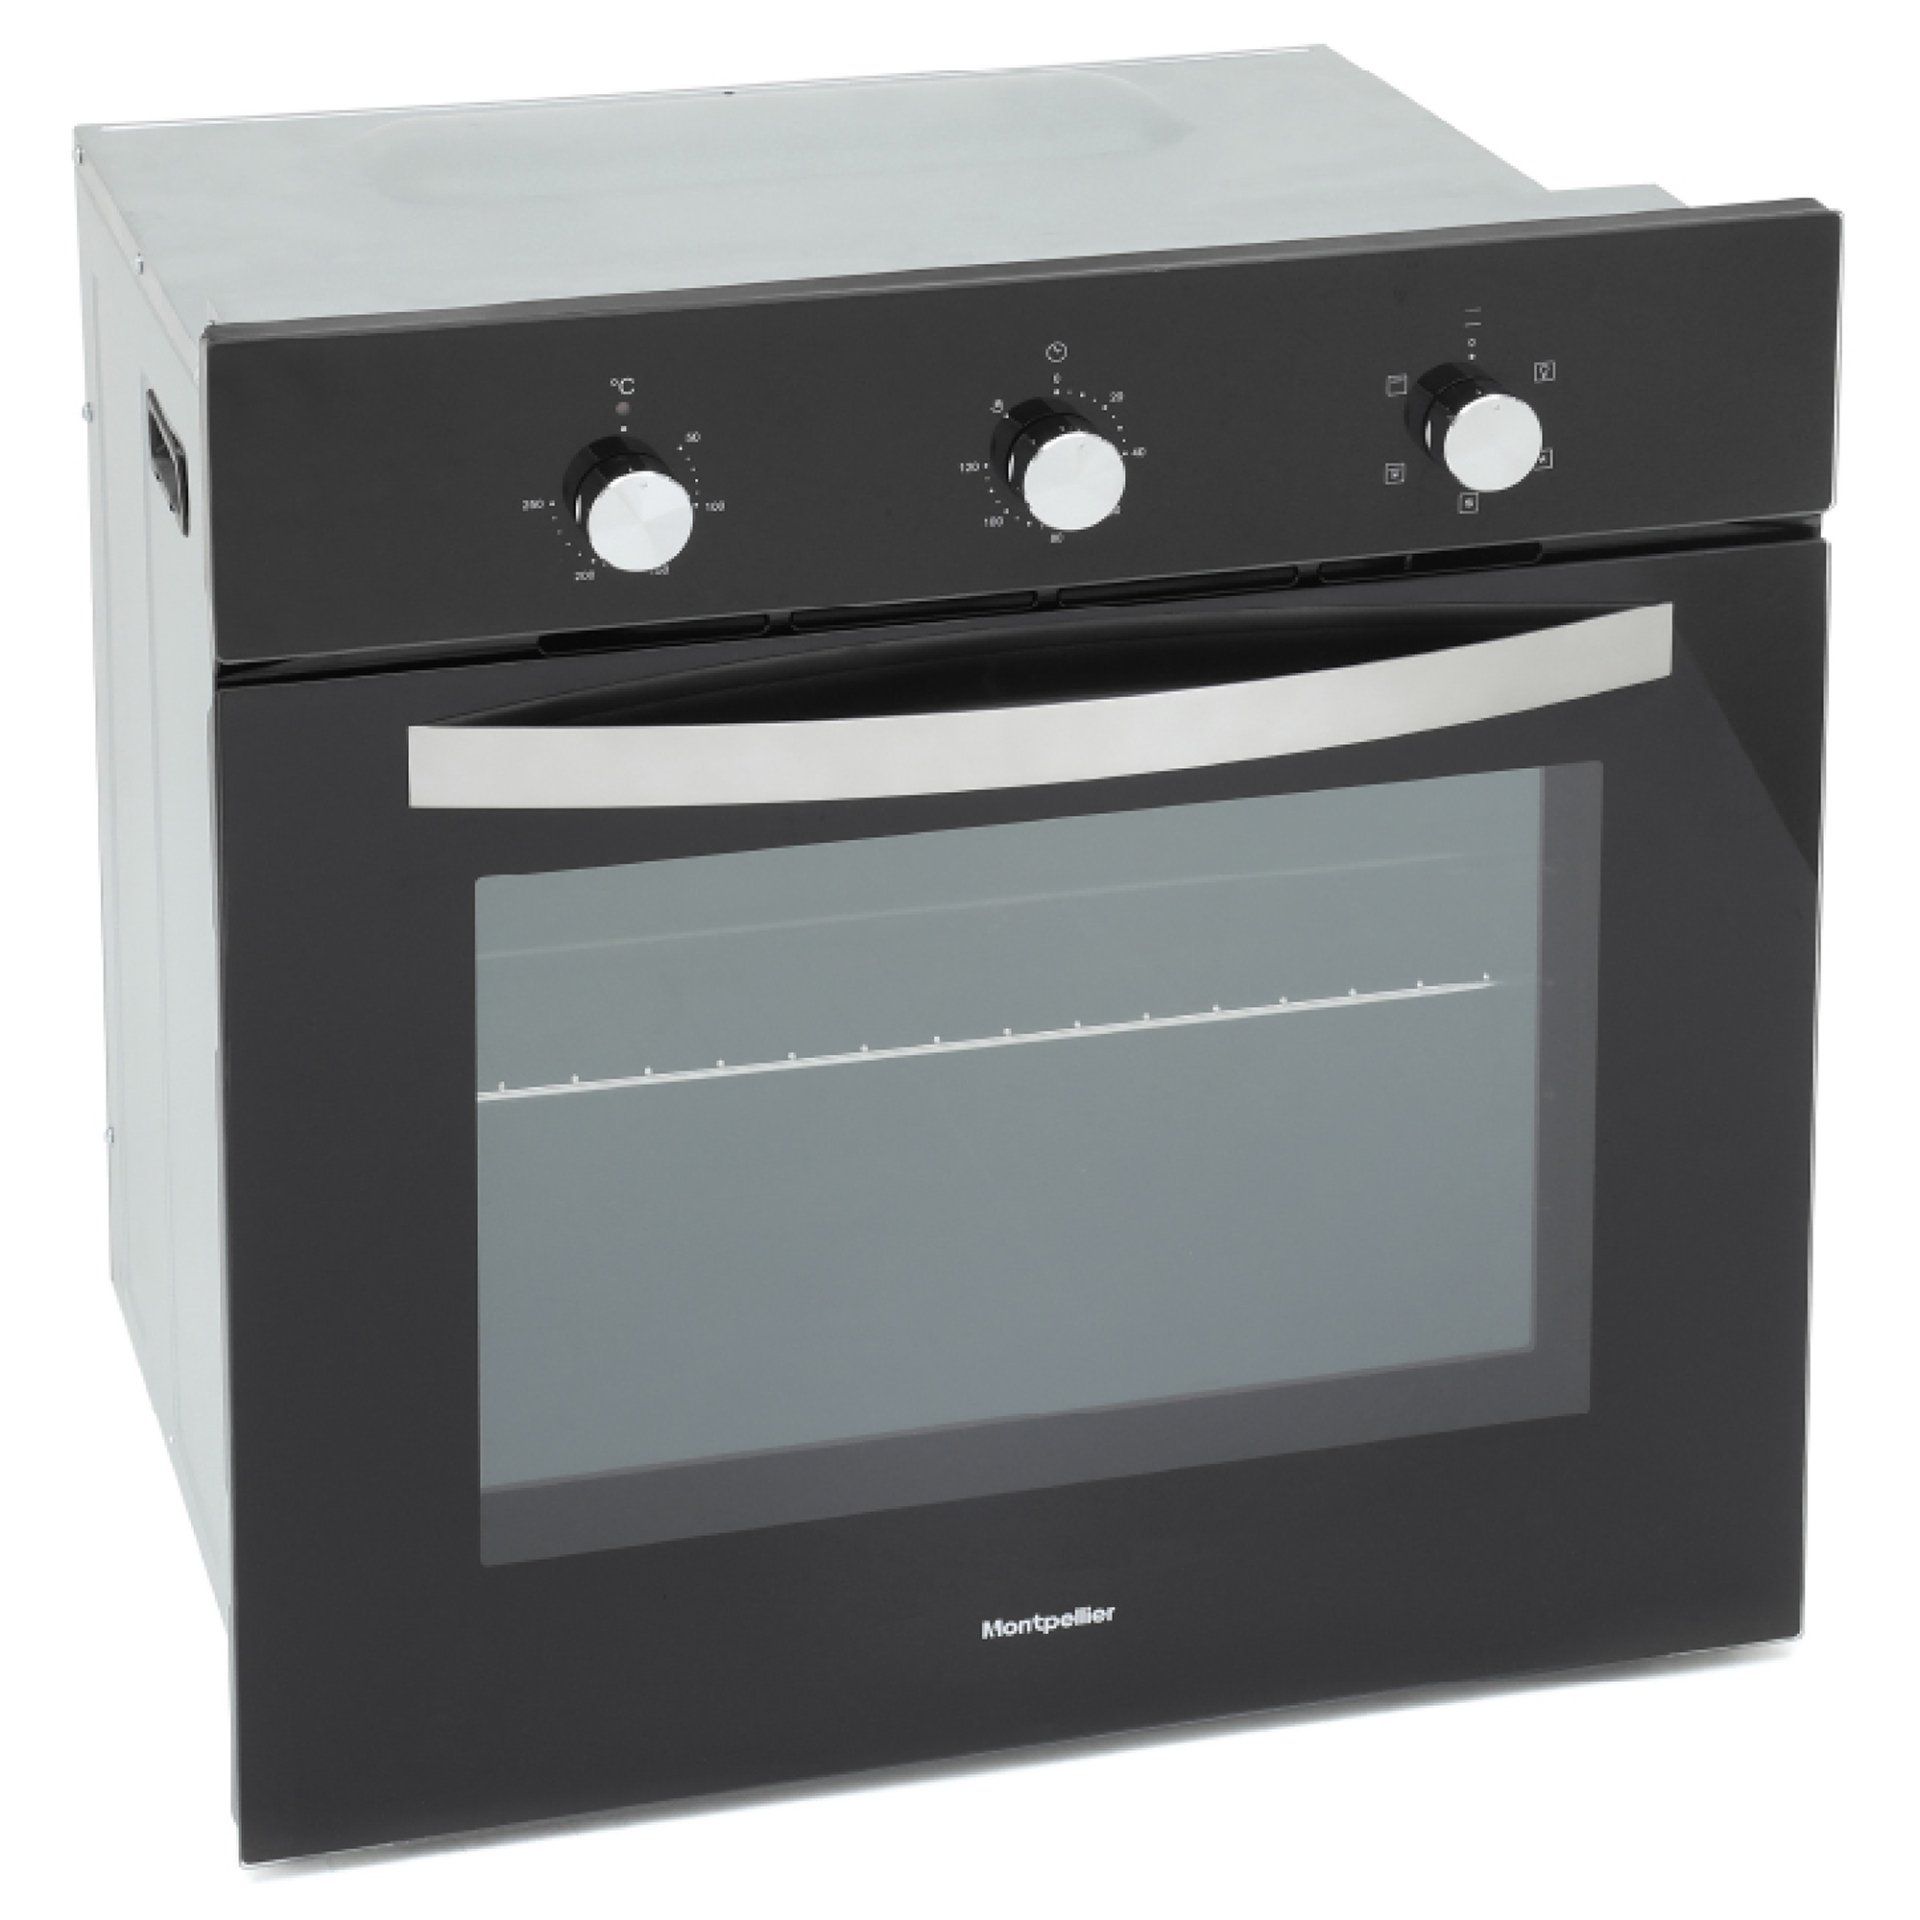 Montpellier SBFO59b, Black single oven, Plug in